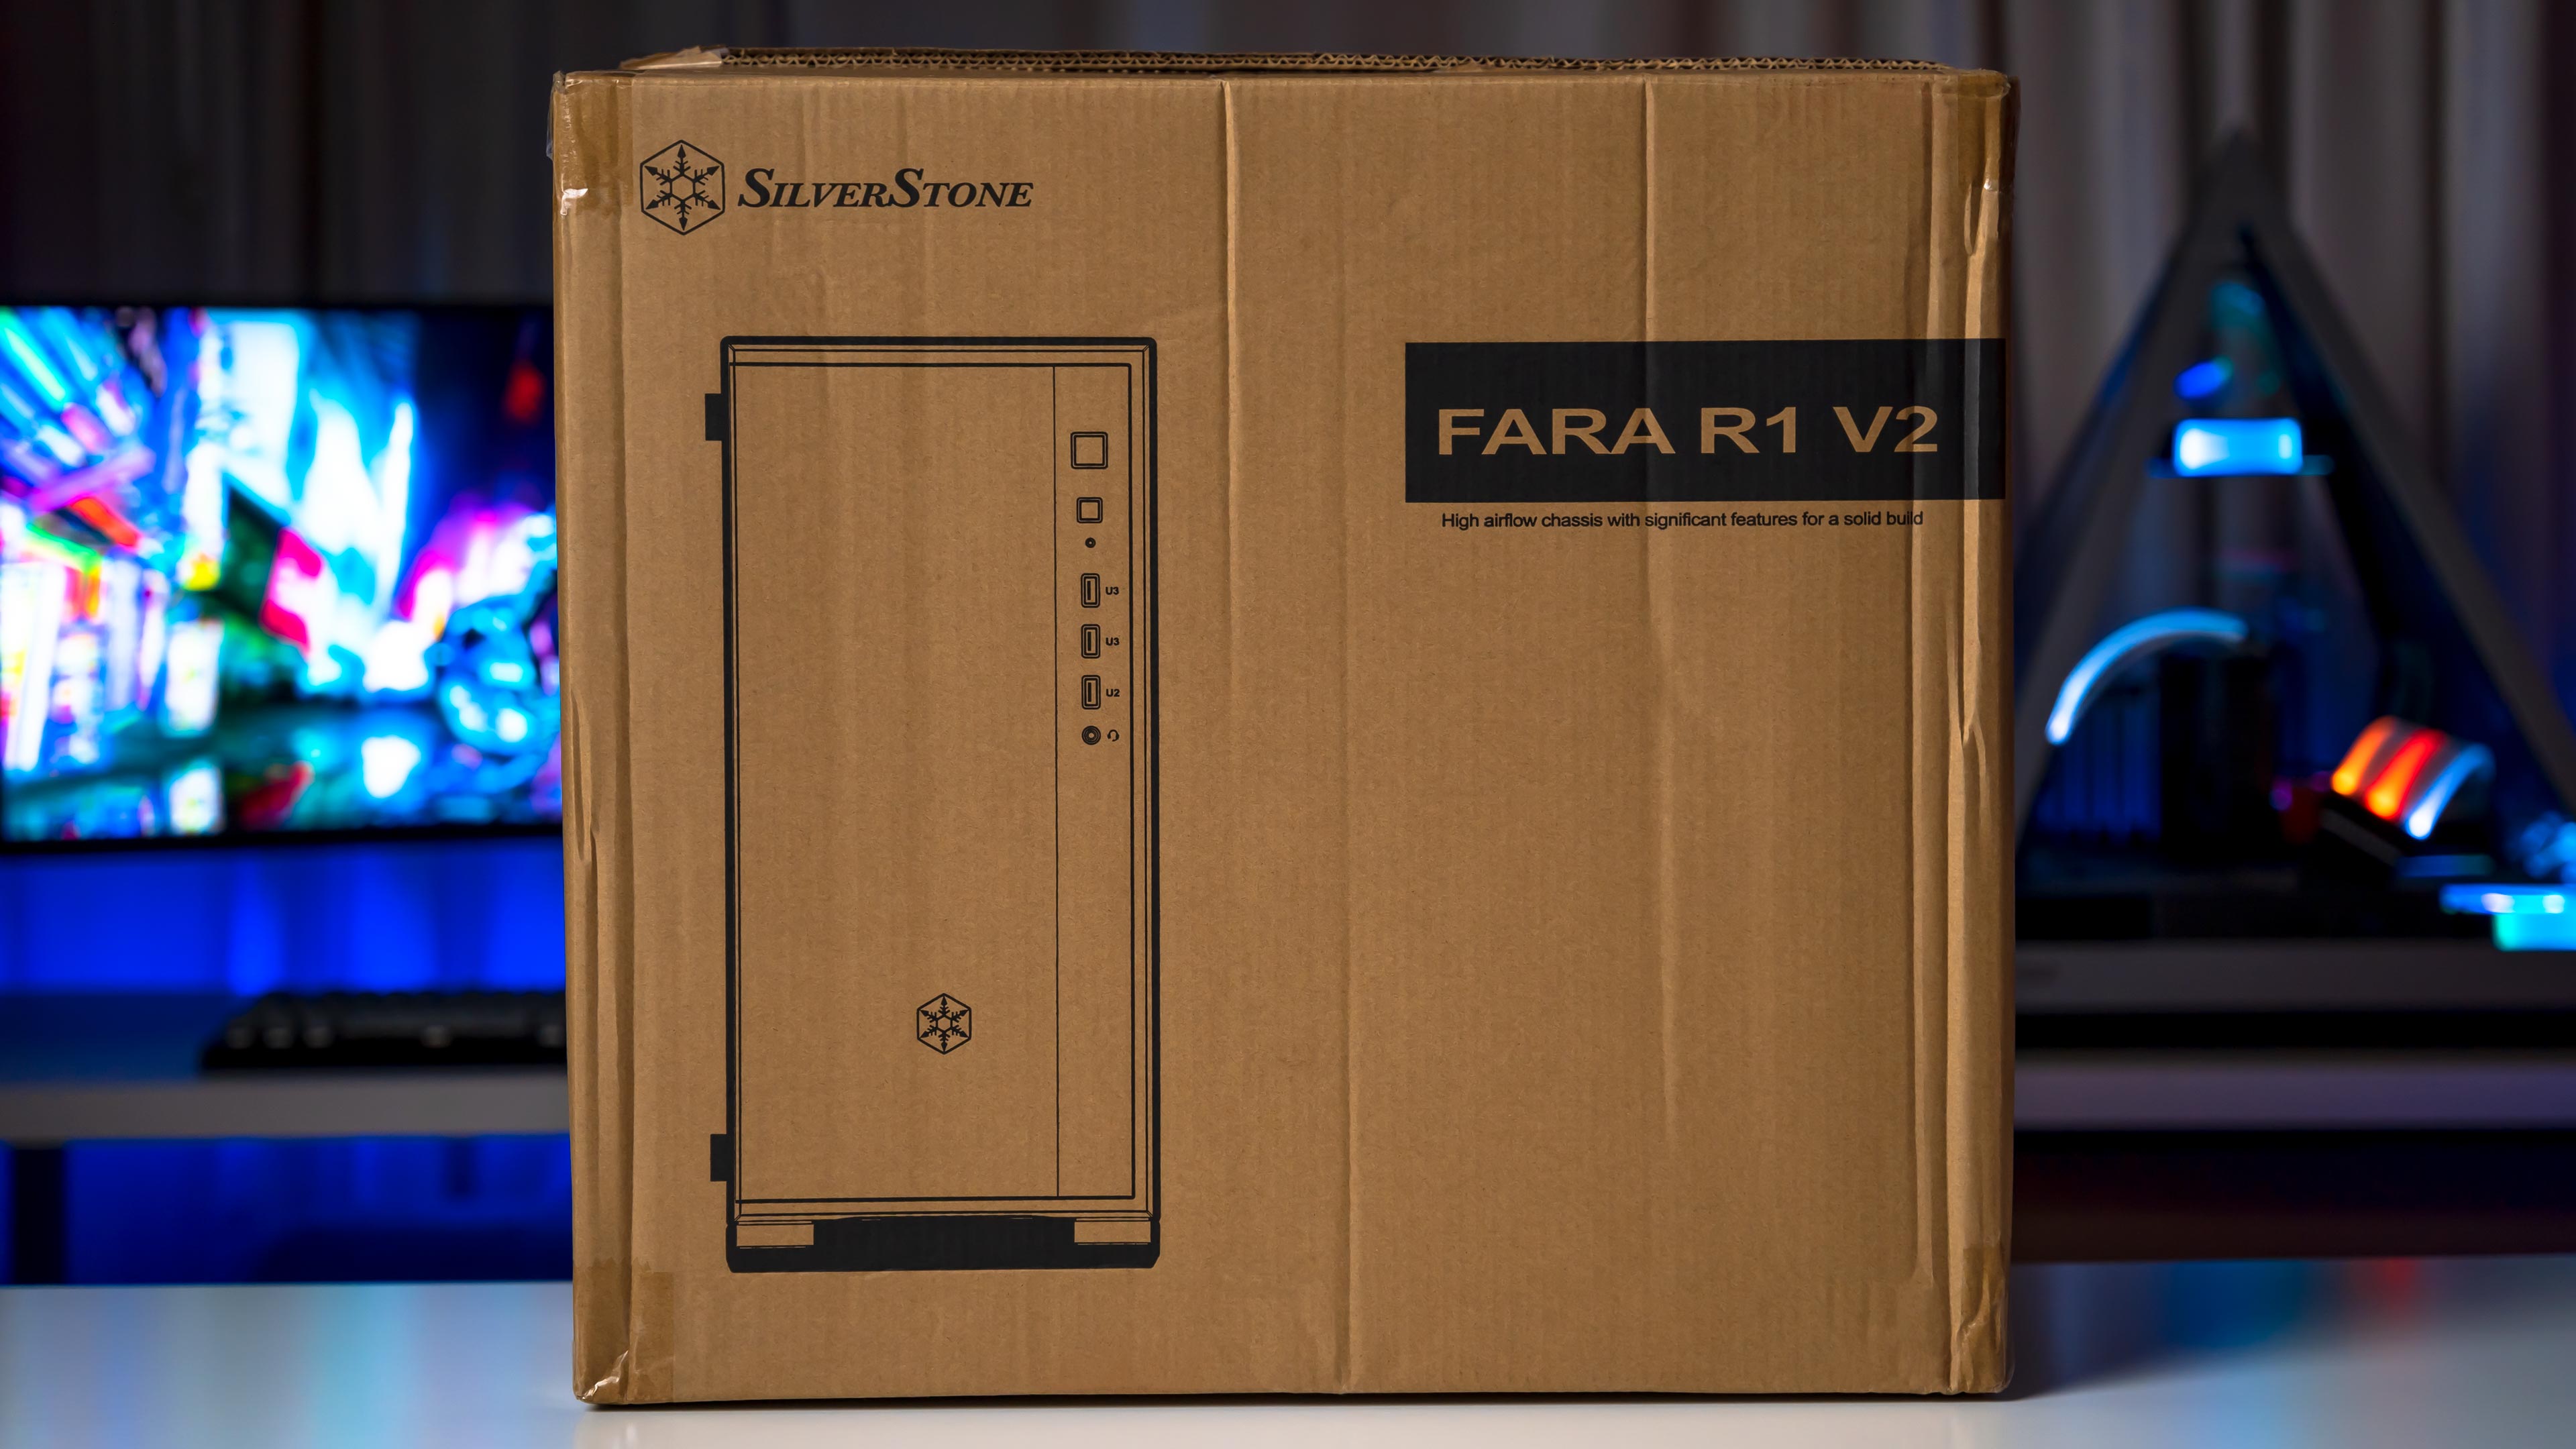 Silverstone Fara R1 V2 Box (1)